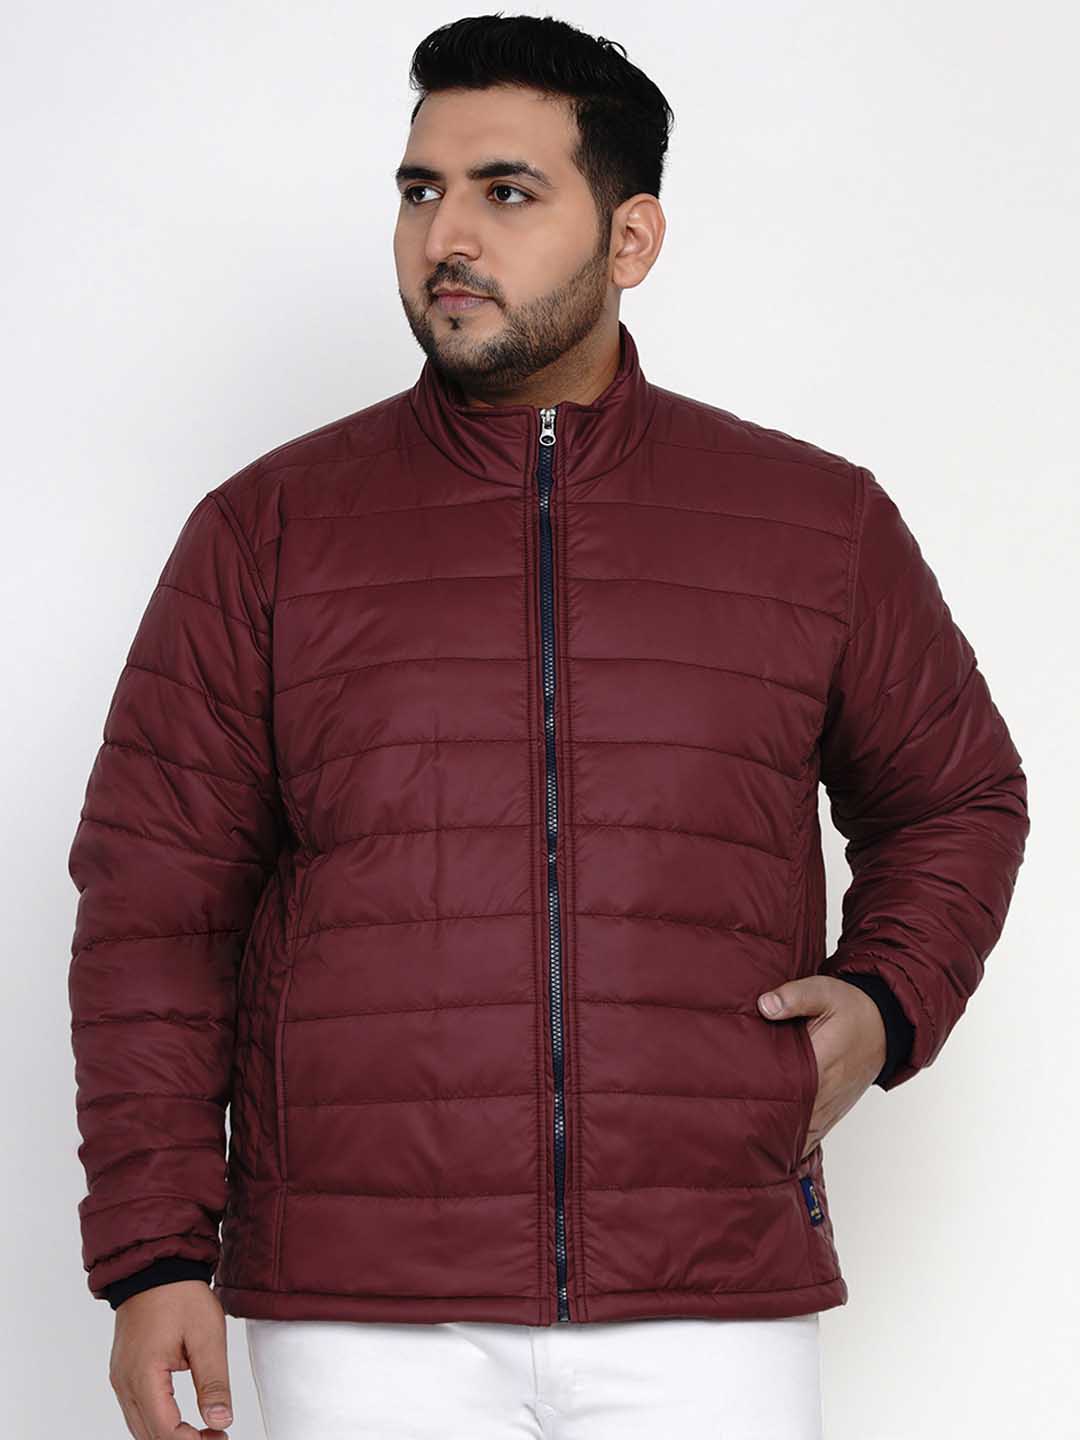 winterwear/jackets/JPJKT7388/jpjkt7388-2.jpg